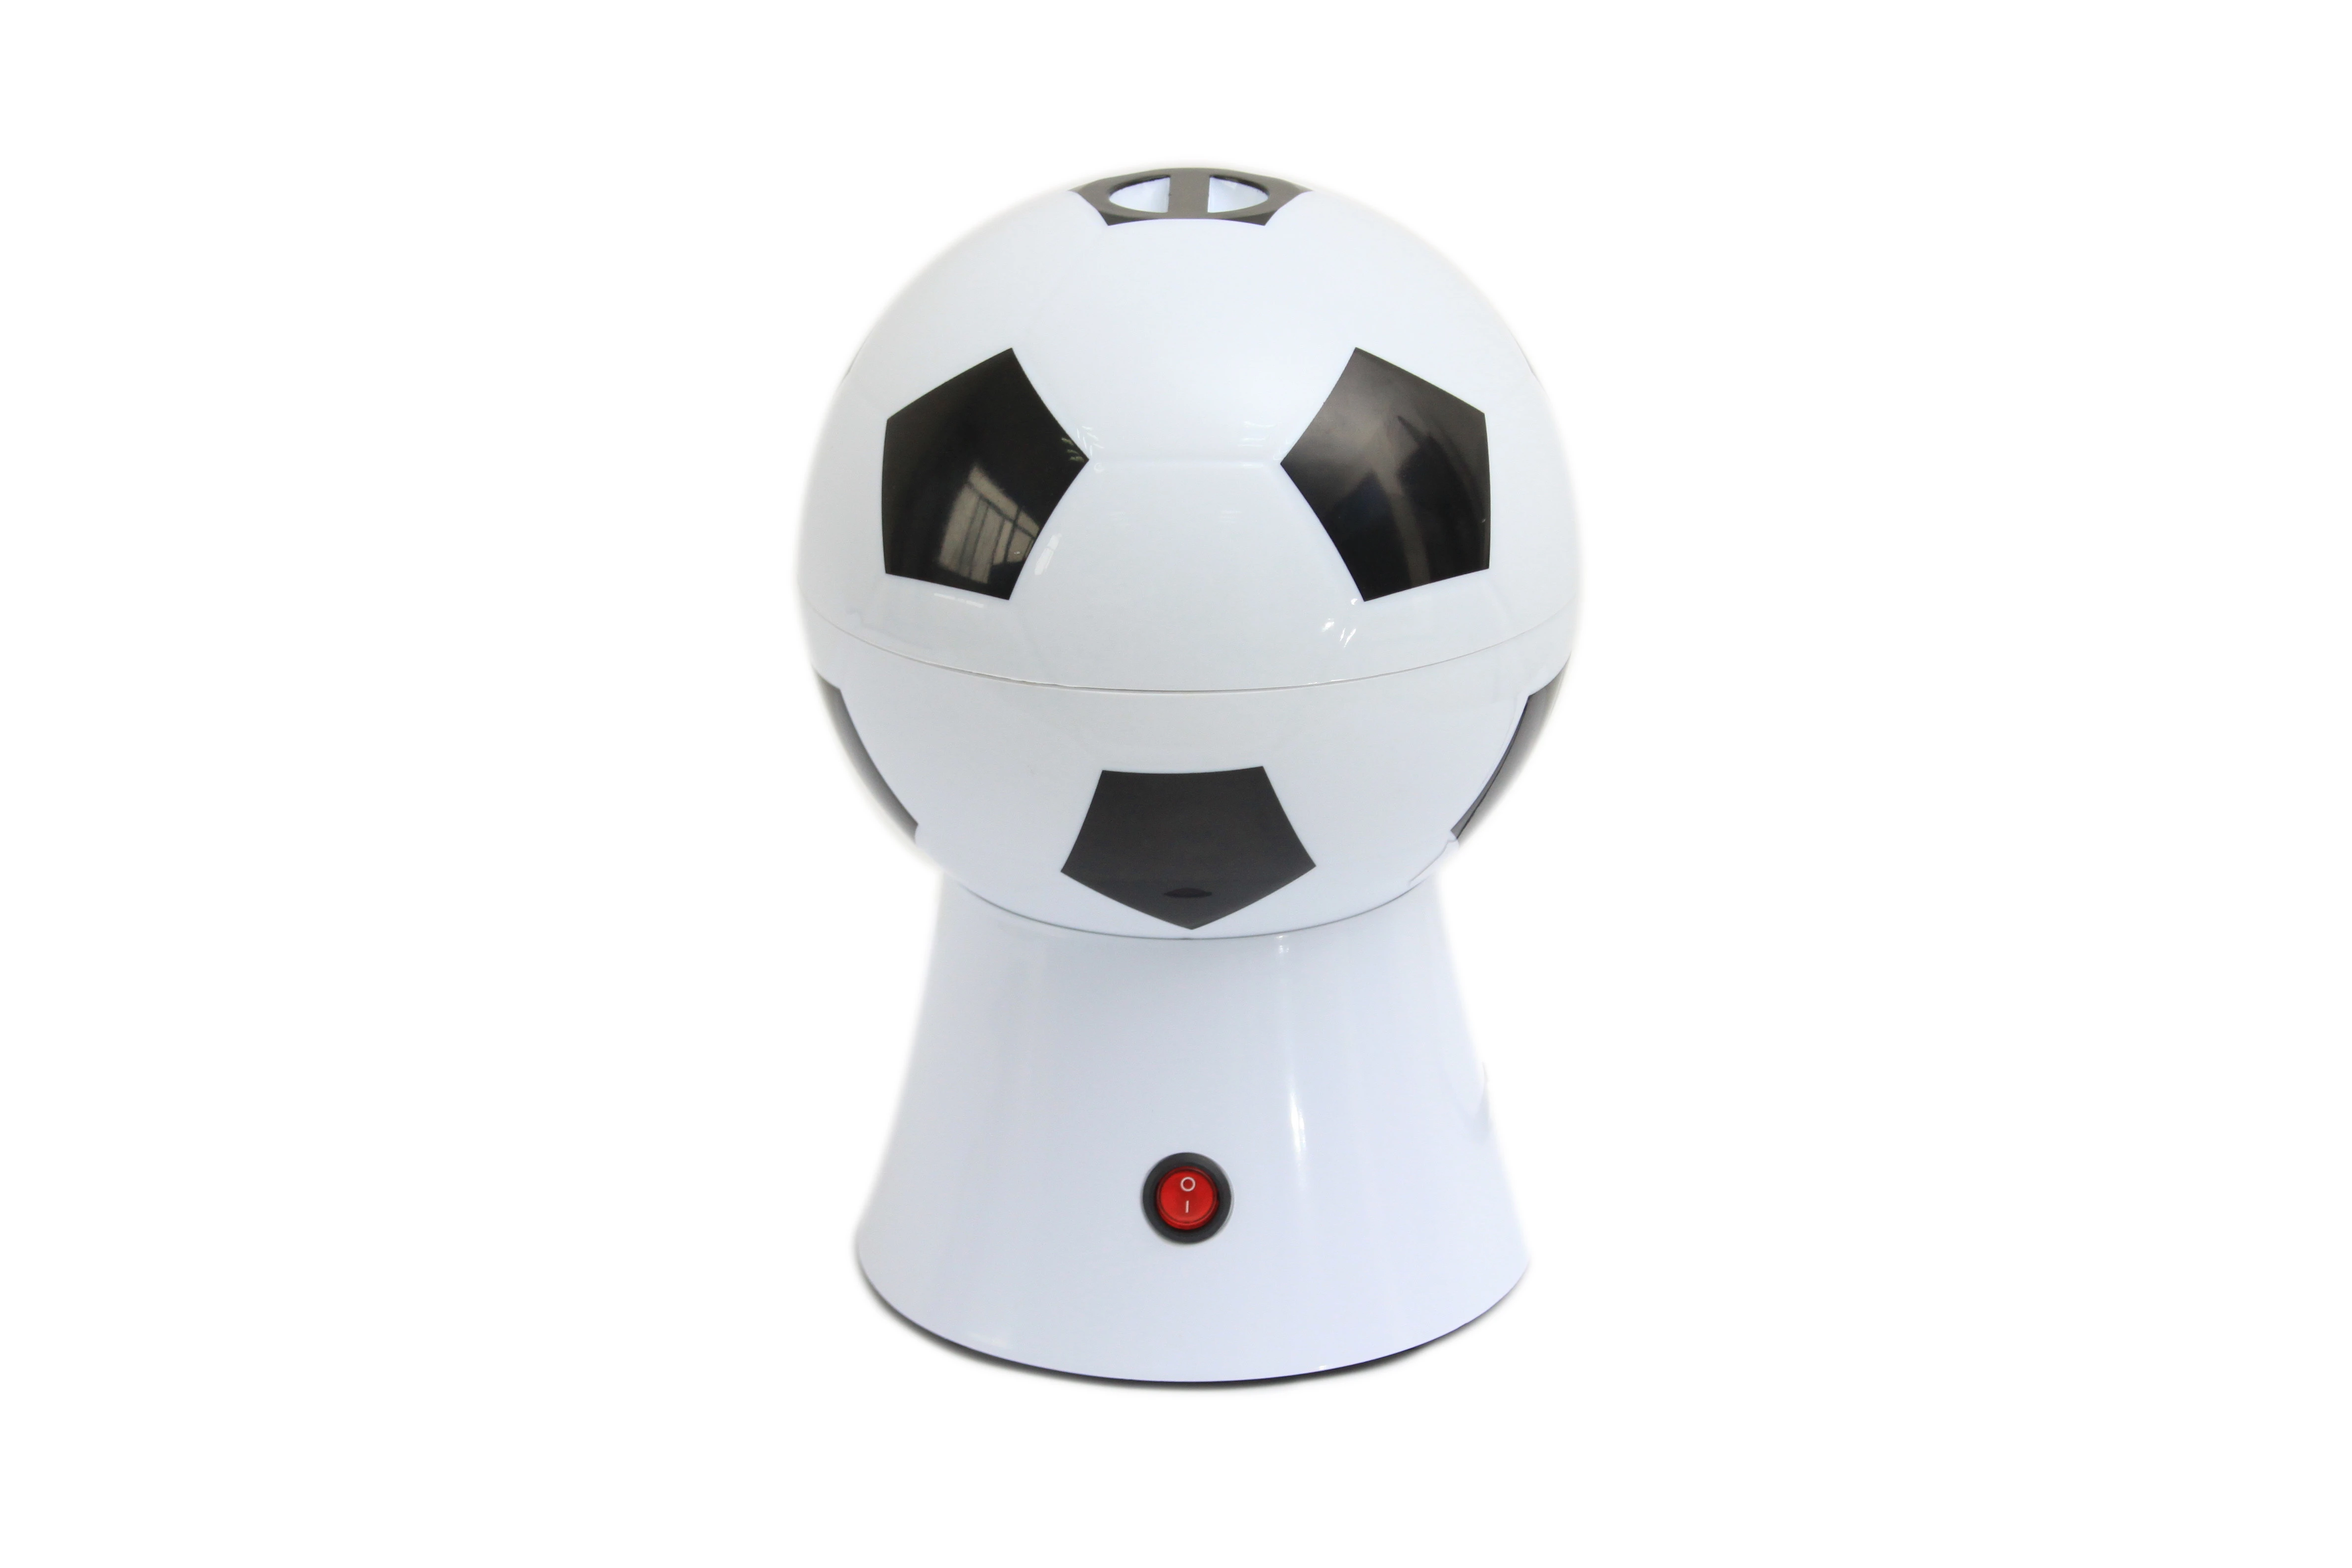 World cup football design 1200w hot air popcorn maker mini popcorn maker on sale